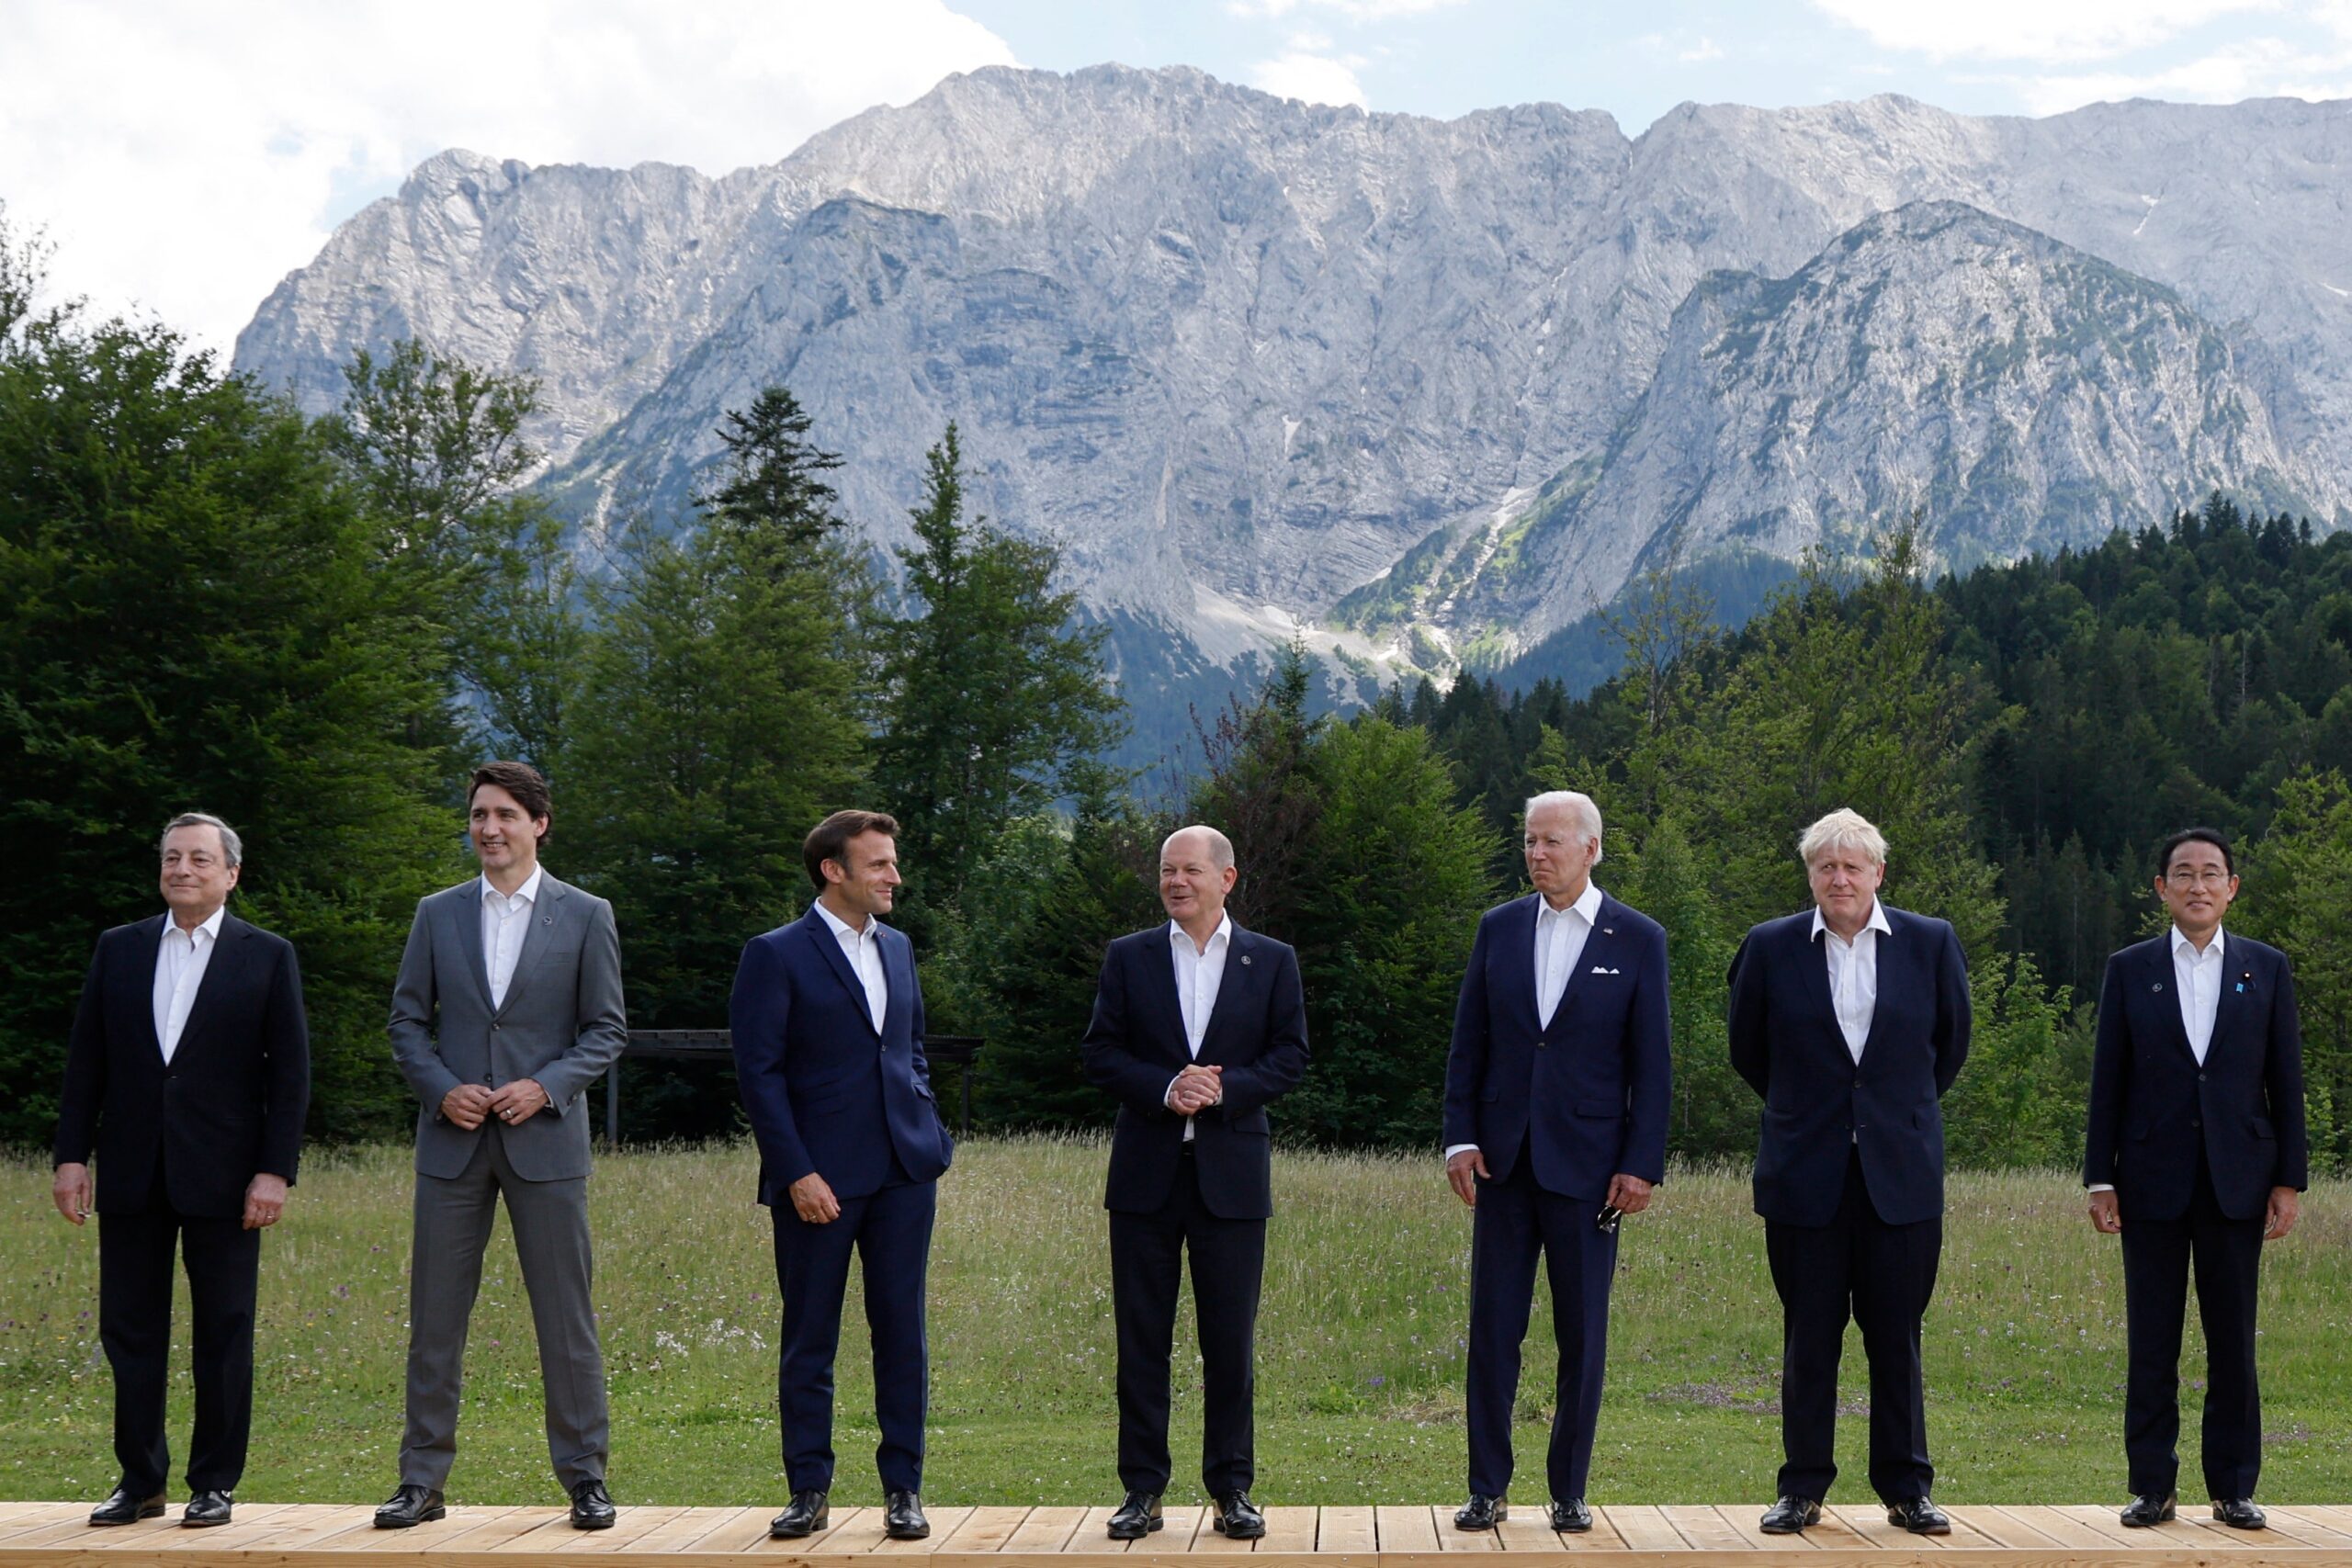 g7-politicians-reach-international-accord:-no-ties